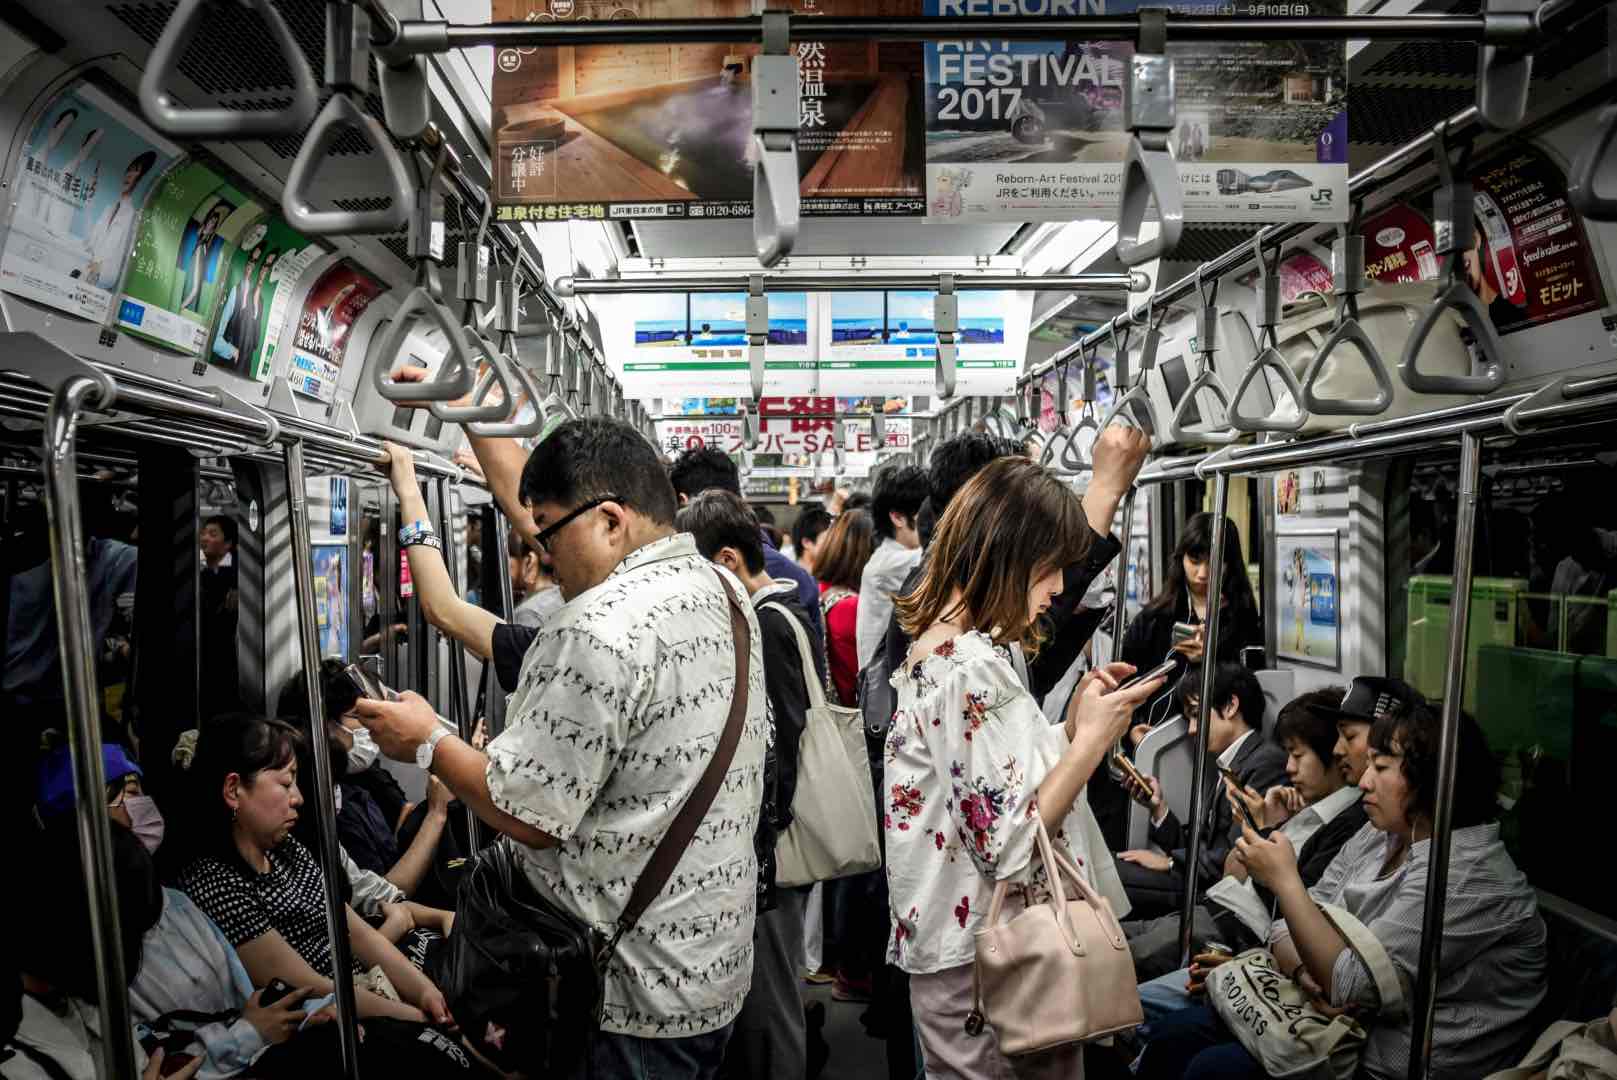 Tokyo Subway train